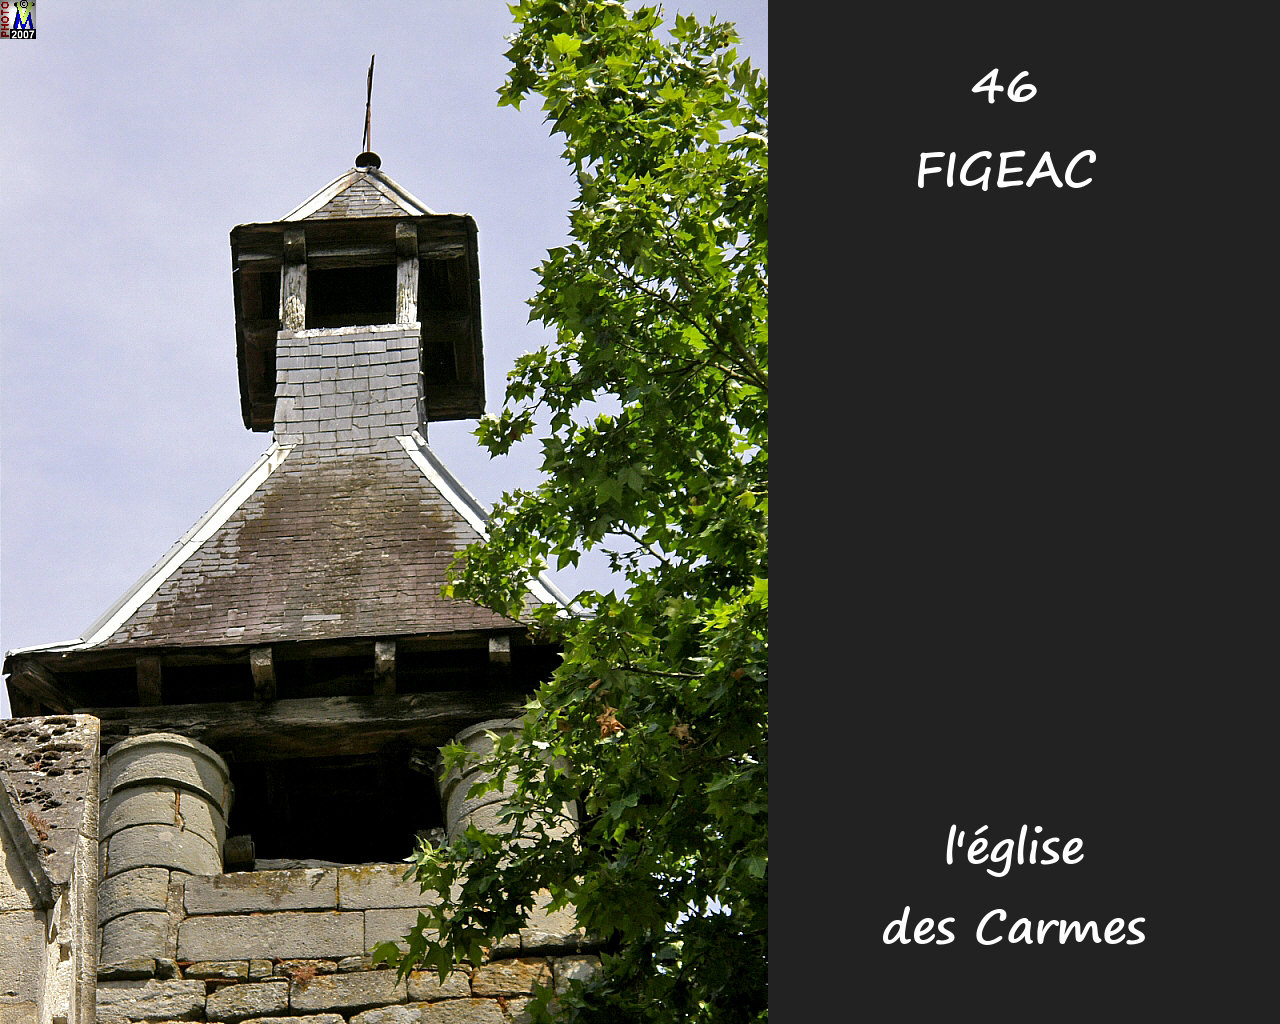 46FIGEAC_eglise-carmes_104.jpg